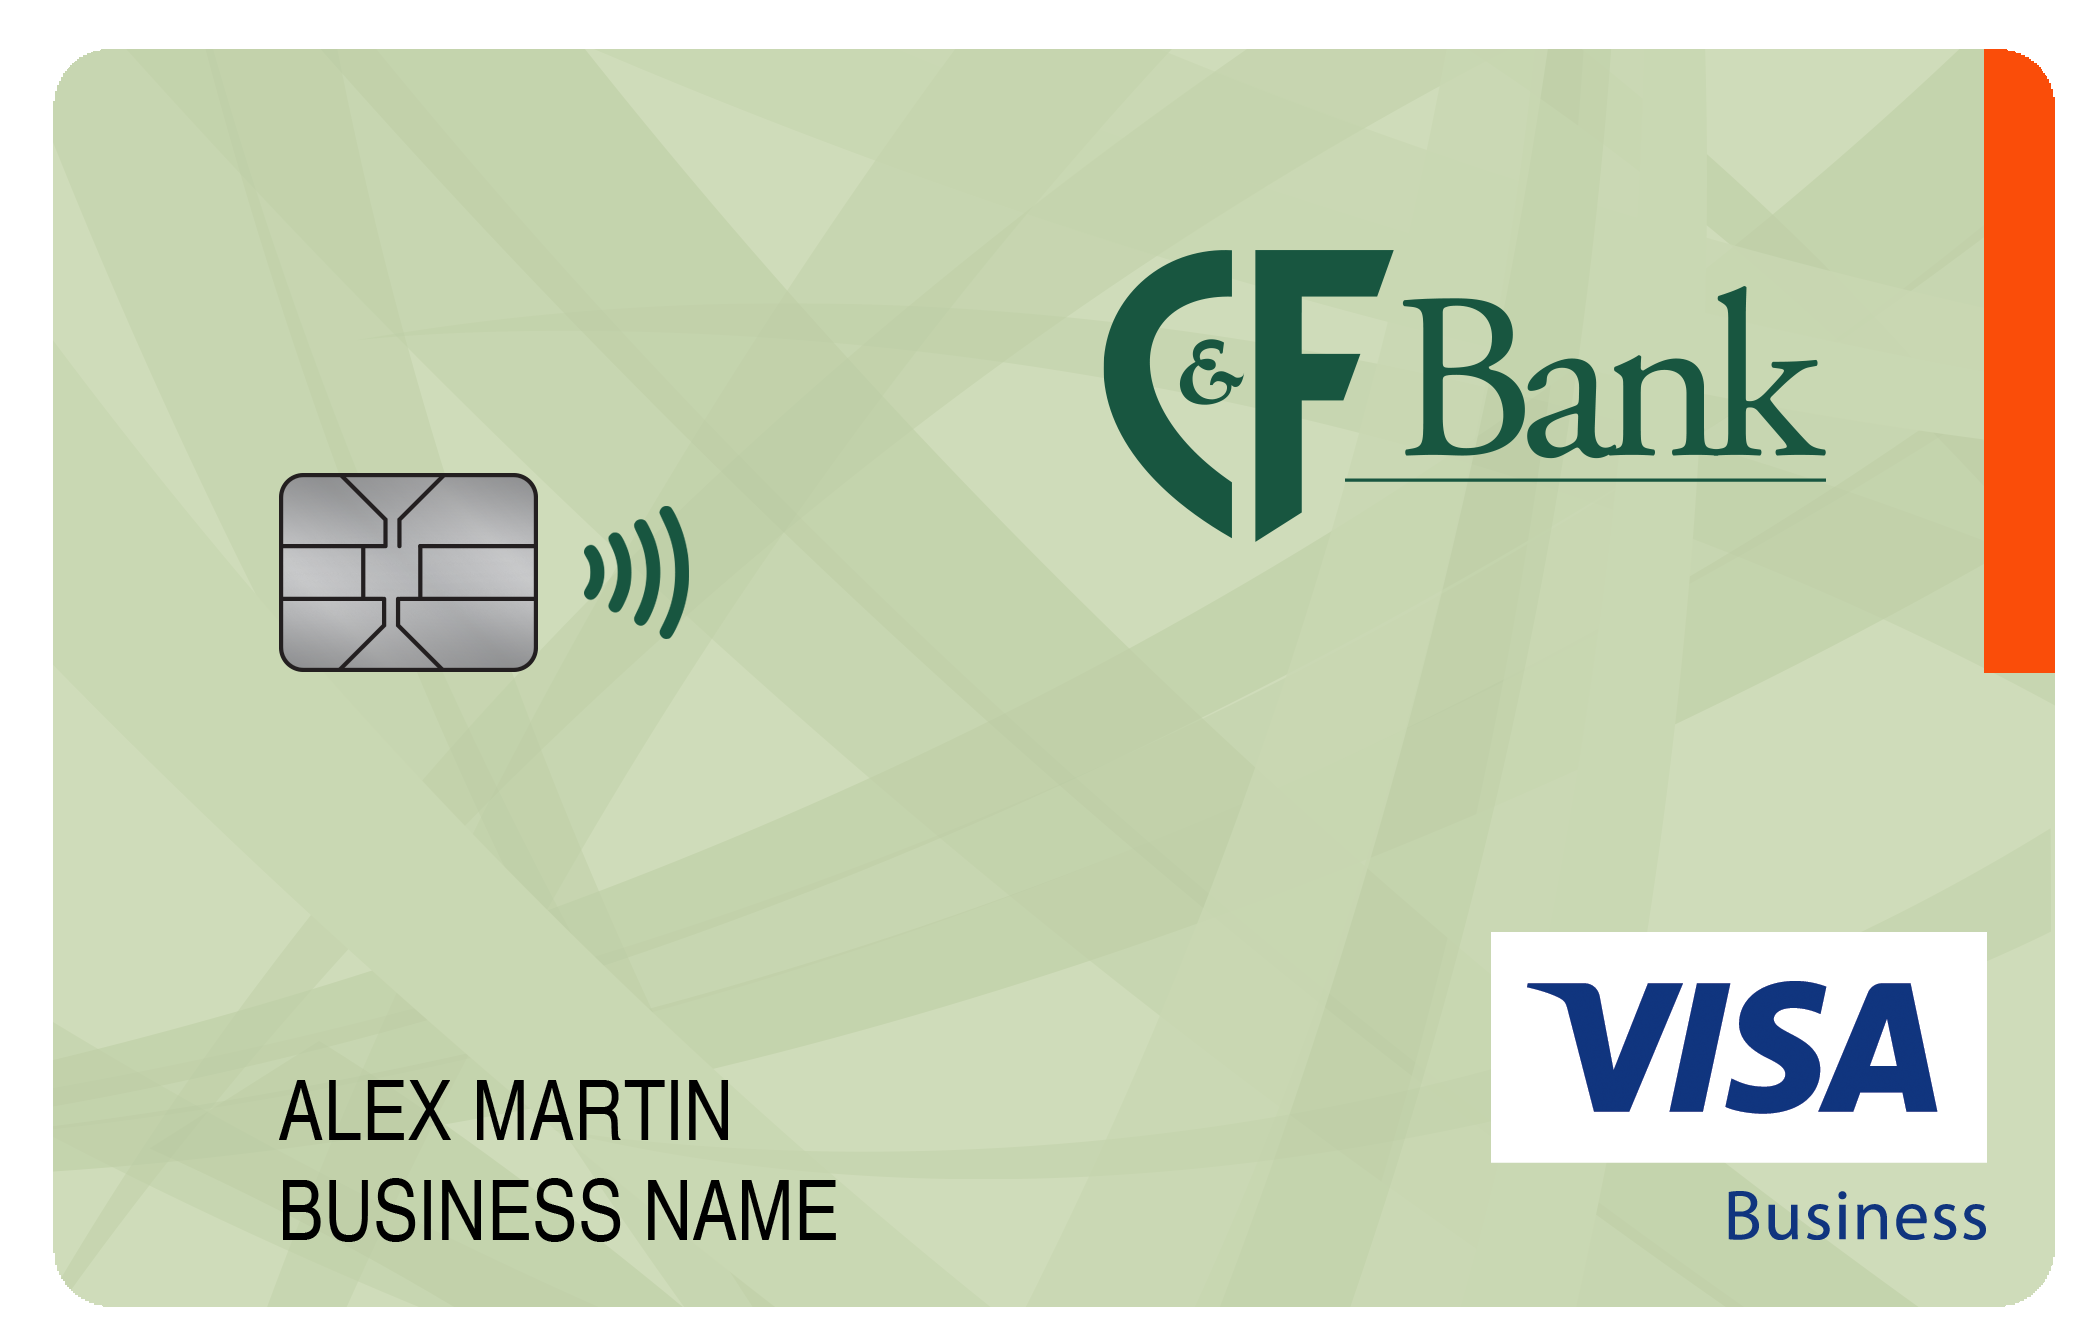 C&F Bank Business Cash Preferred Card